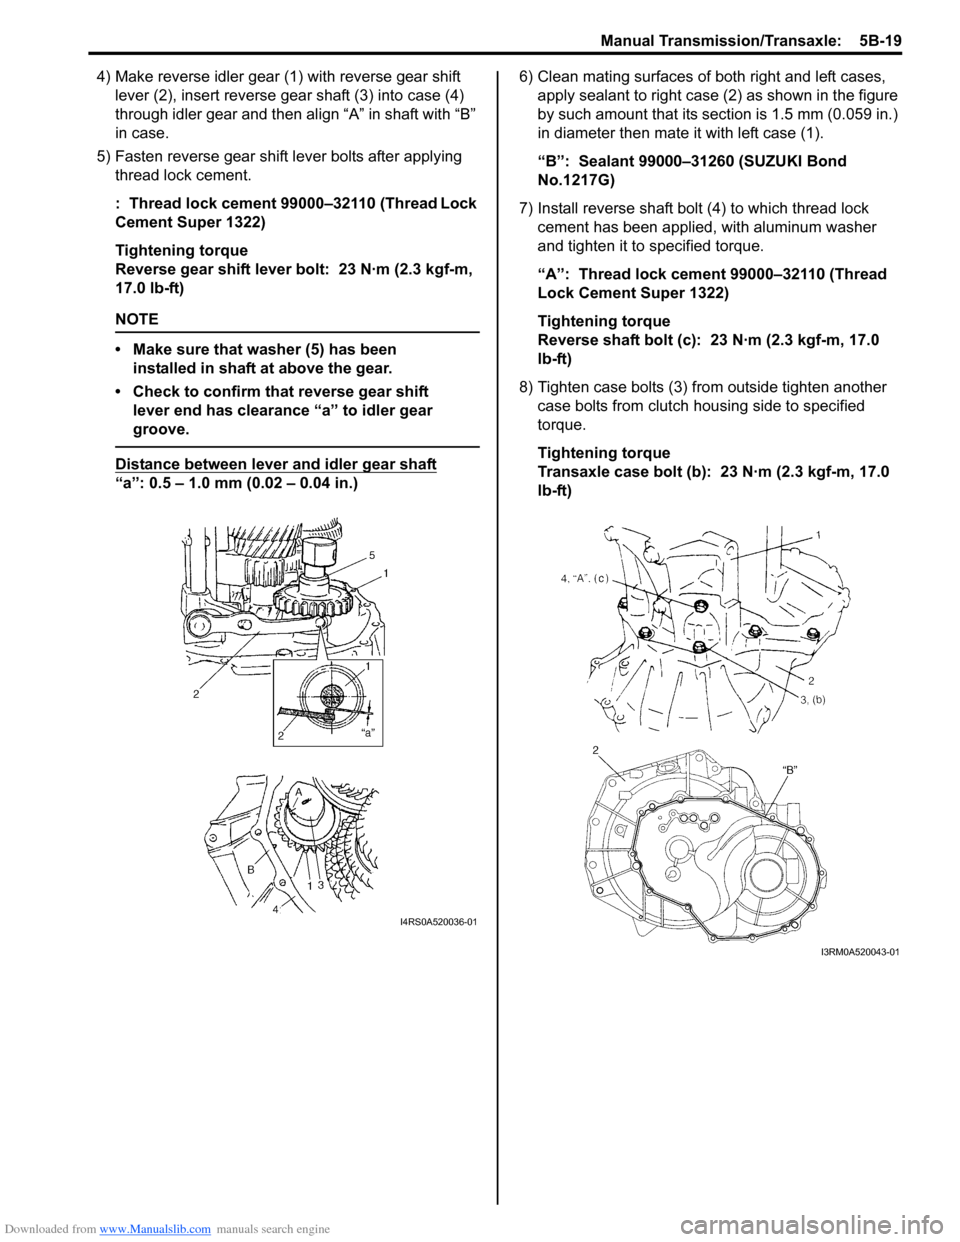 SUZUKI SWIFT 2006 2.G Service User Guide Downloaded from www.Manualslib.com manuals search engine Manual Transmission/Transaxle:  5B-19
4) Make reverse idler gear (1) with reverse gear shift lever (2), insert reverse gear shaft (3) into case